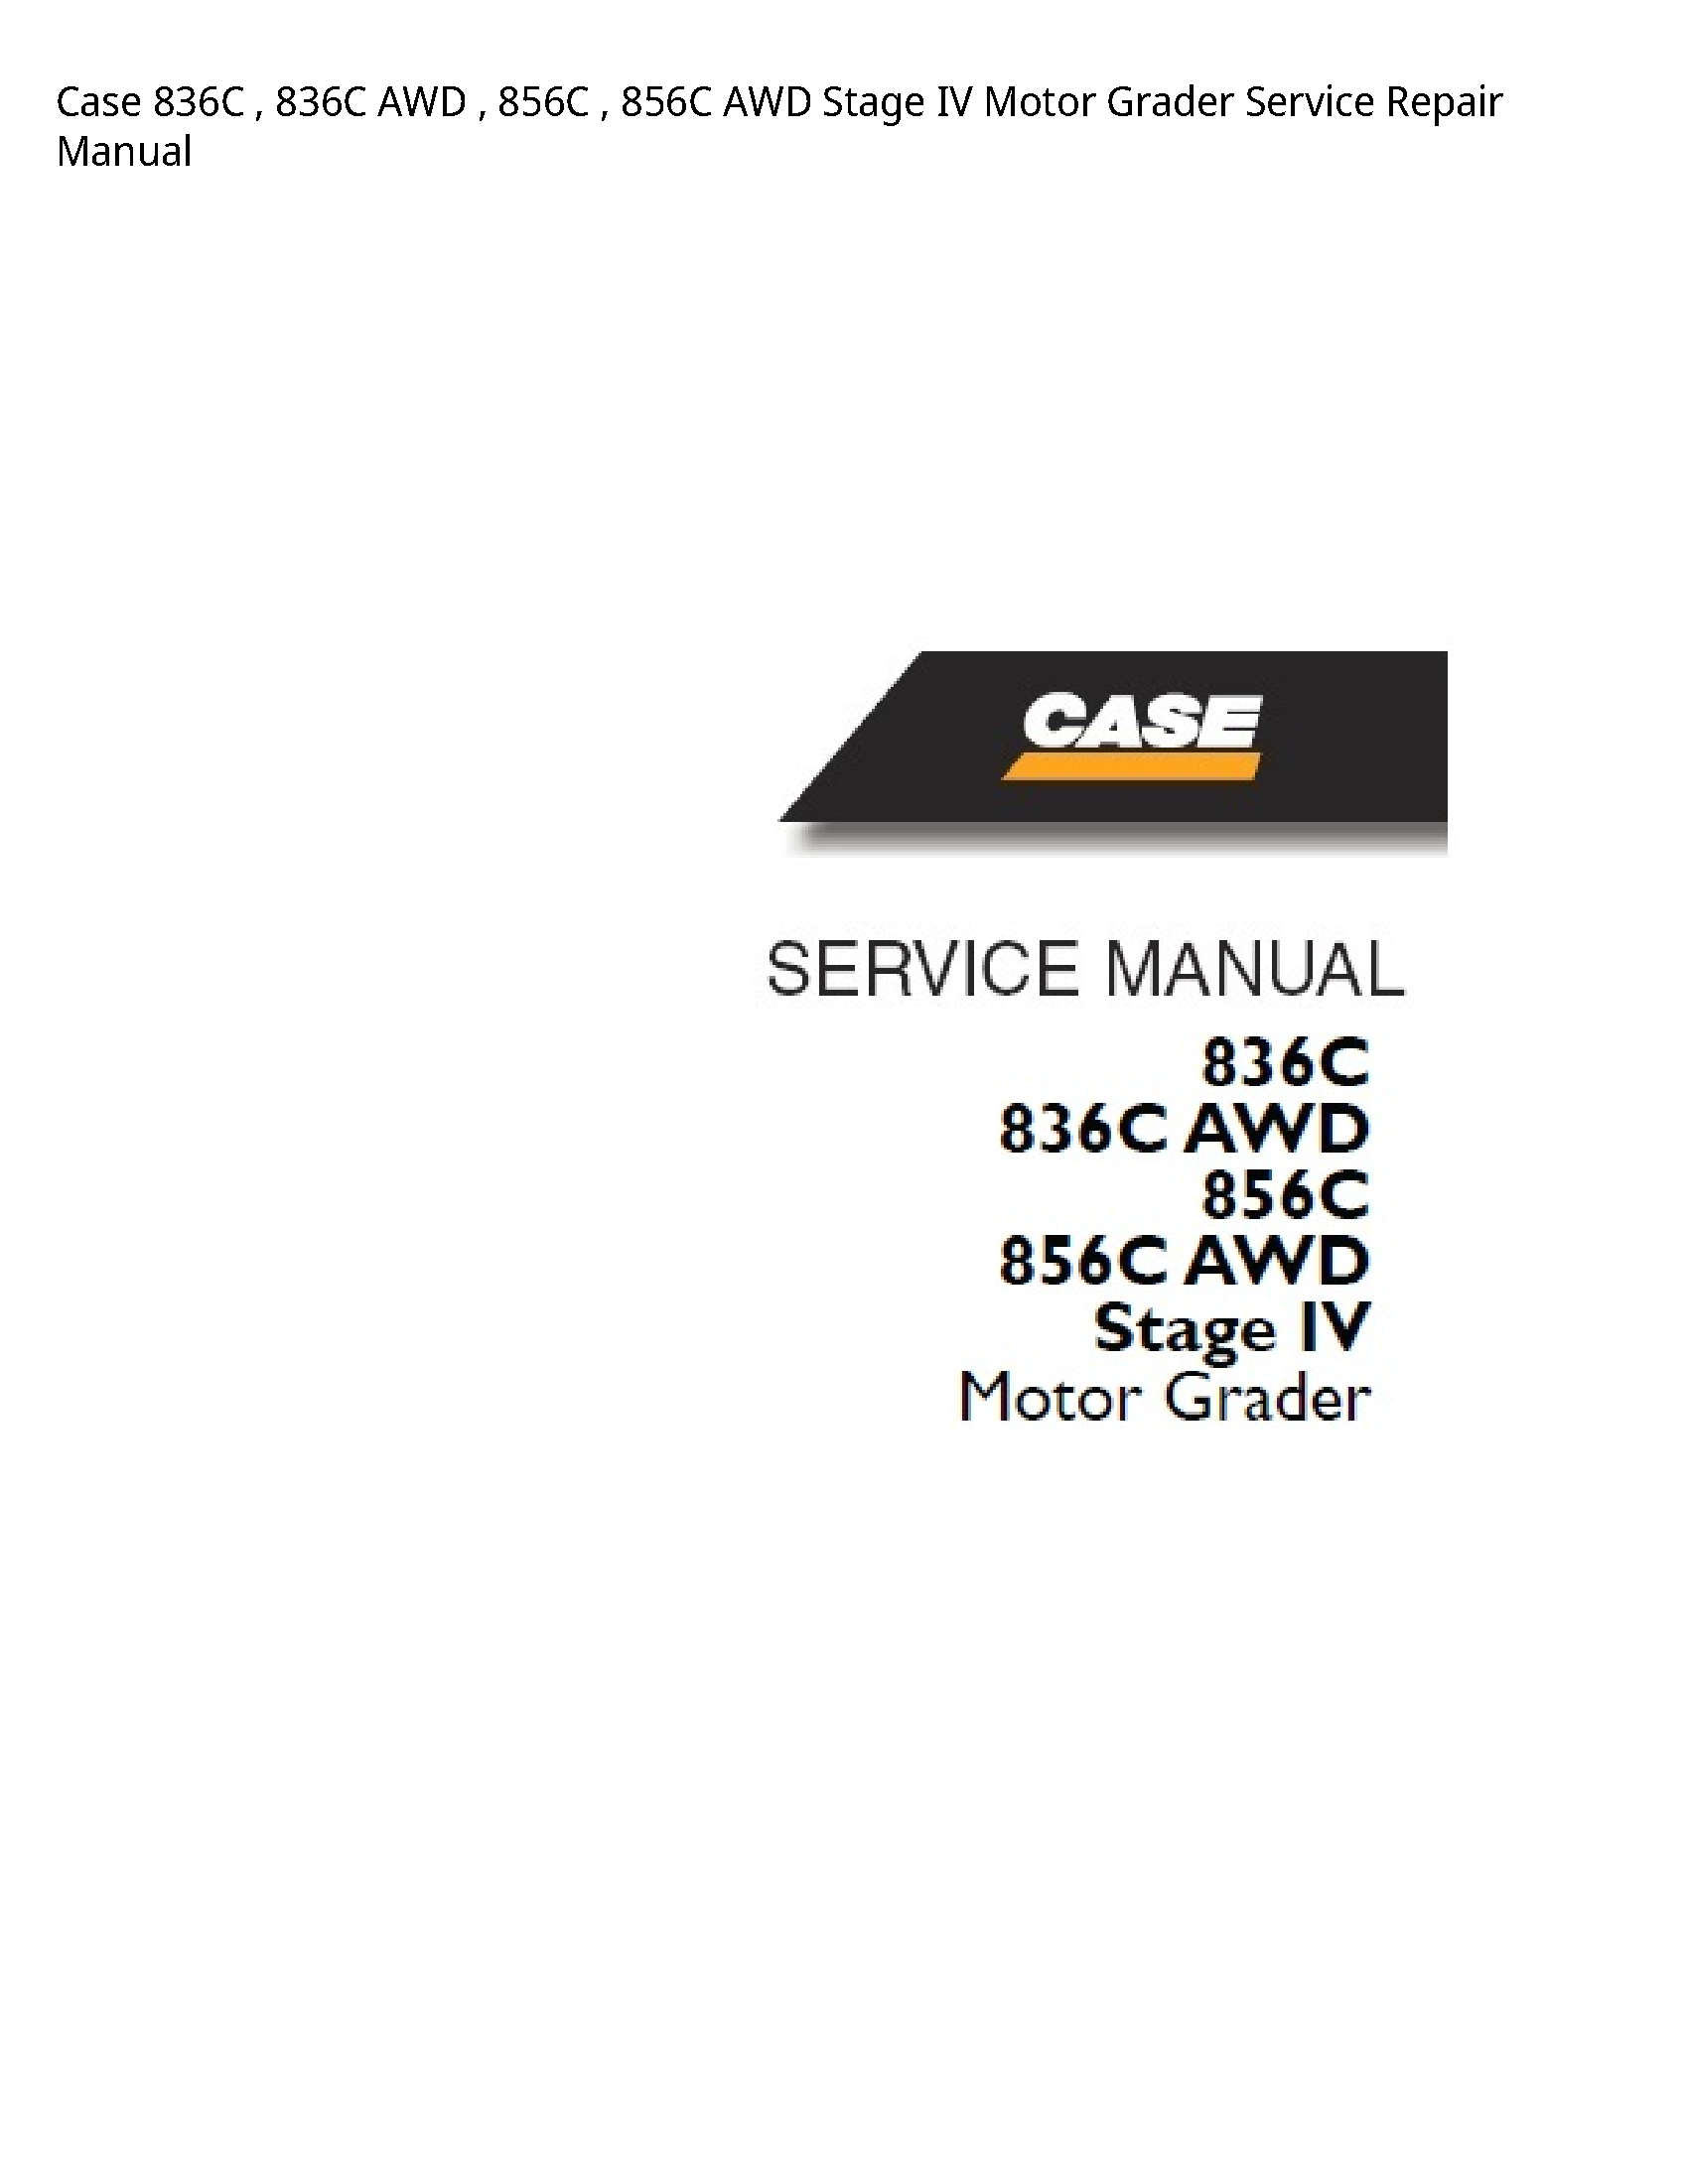 Case/Case IH 836C AWD AWD Stage IV Motor Grader manual